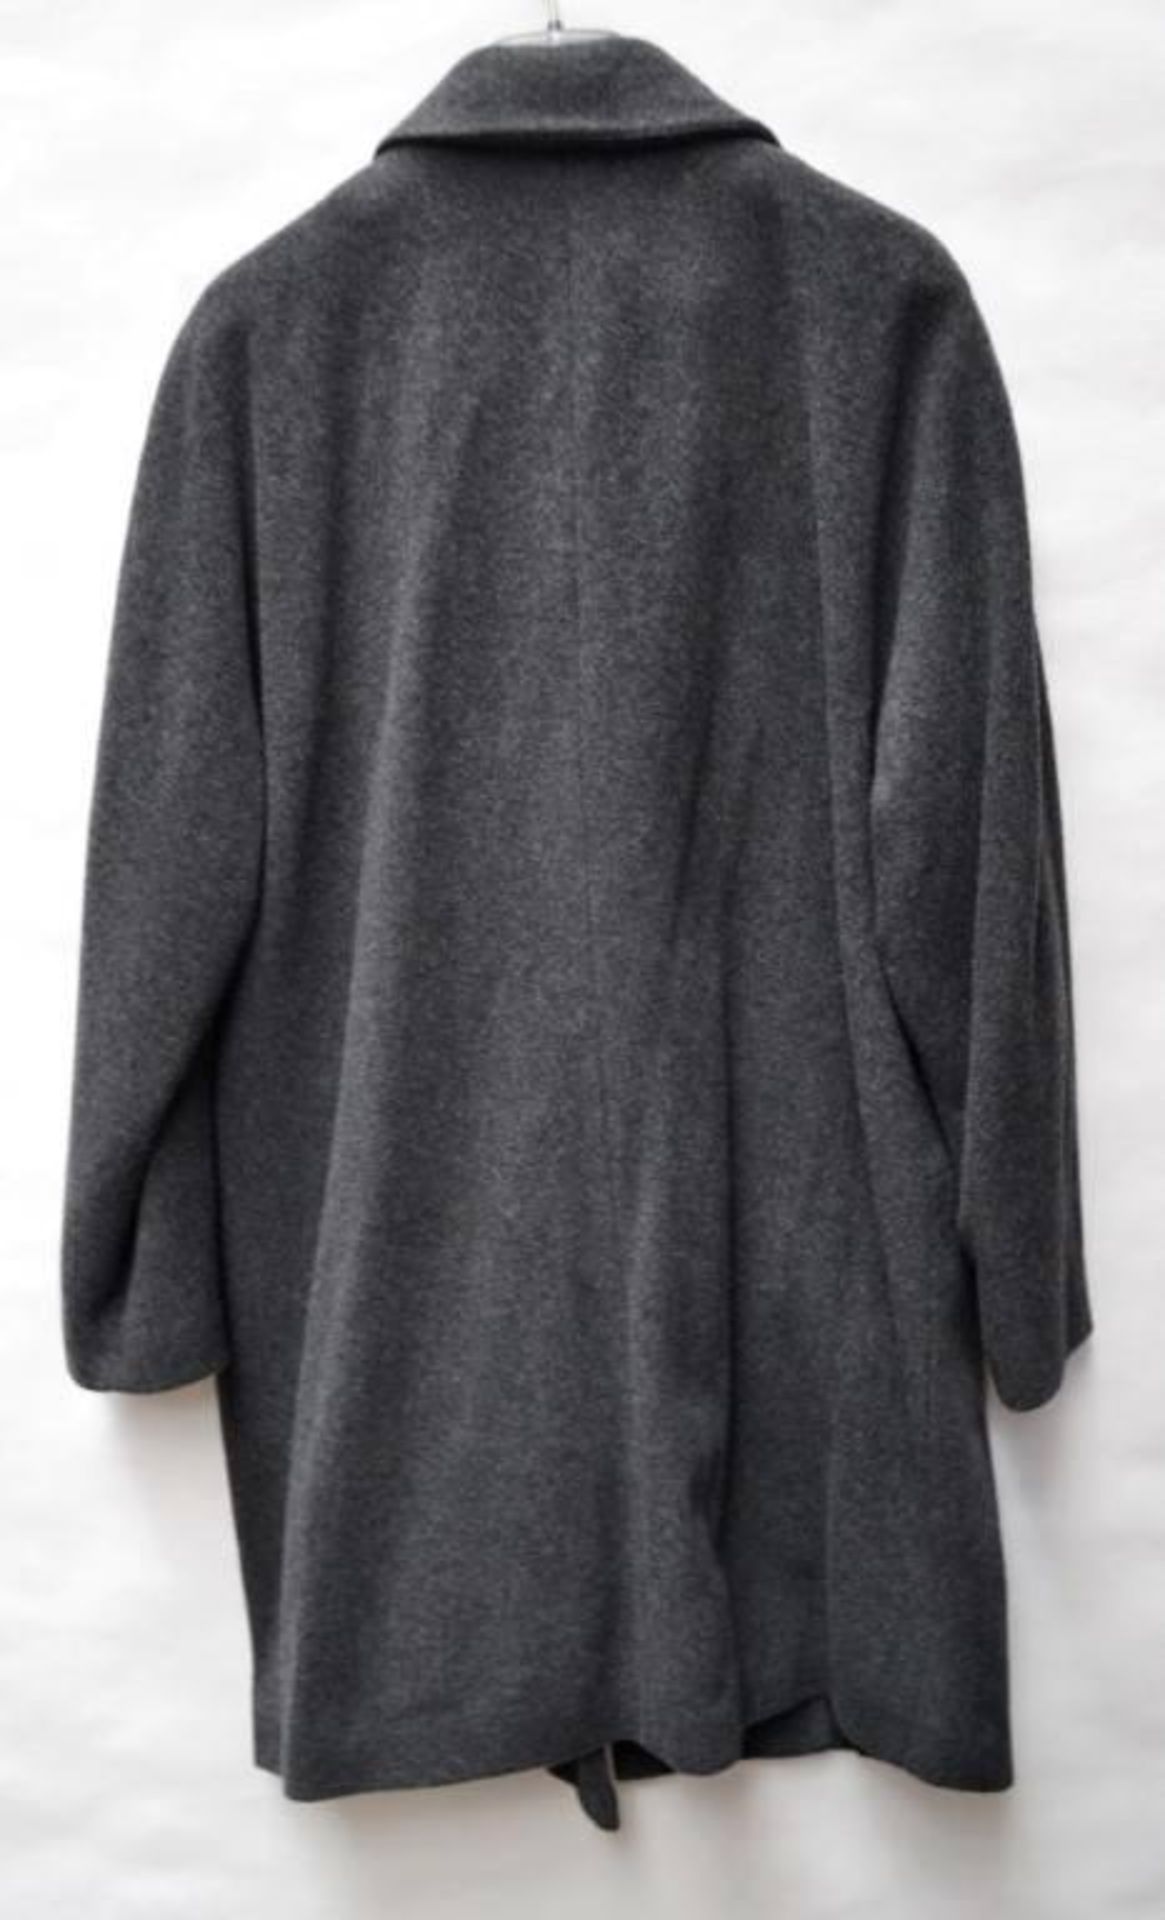 1 x Steilmann Kirsten Womens Wool Rich Overcoat In Grey - Size 12 - New Sample Stock - CL210 - Ref M - Image 2 of 2